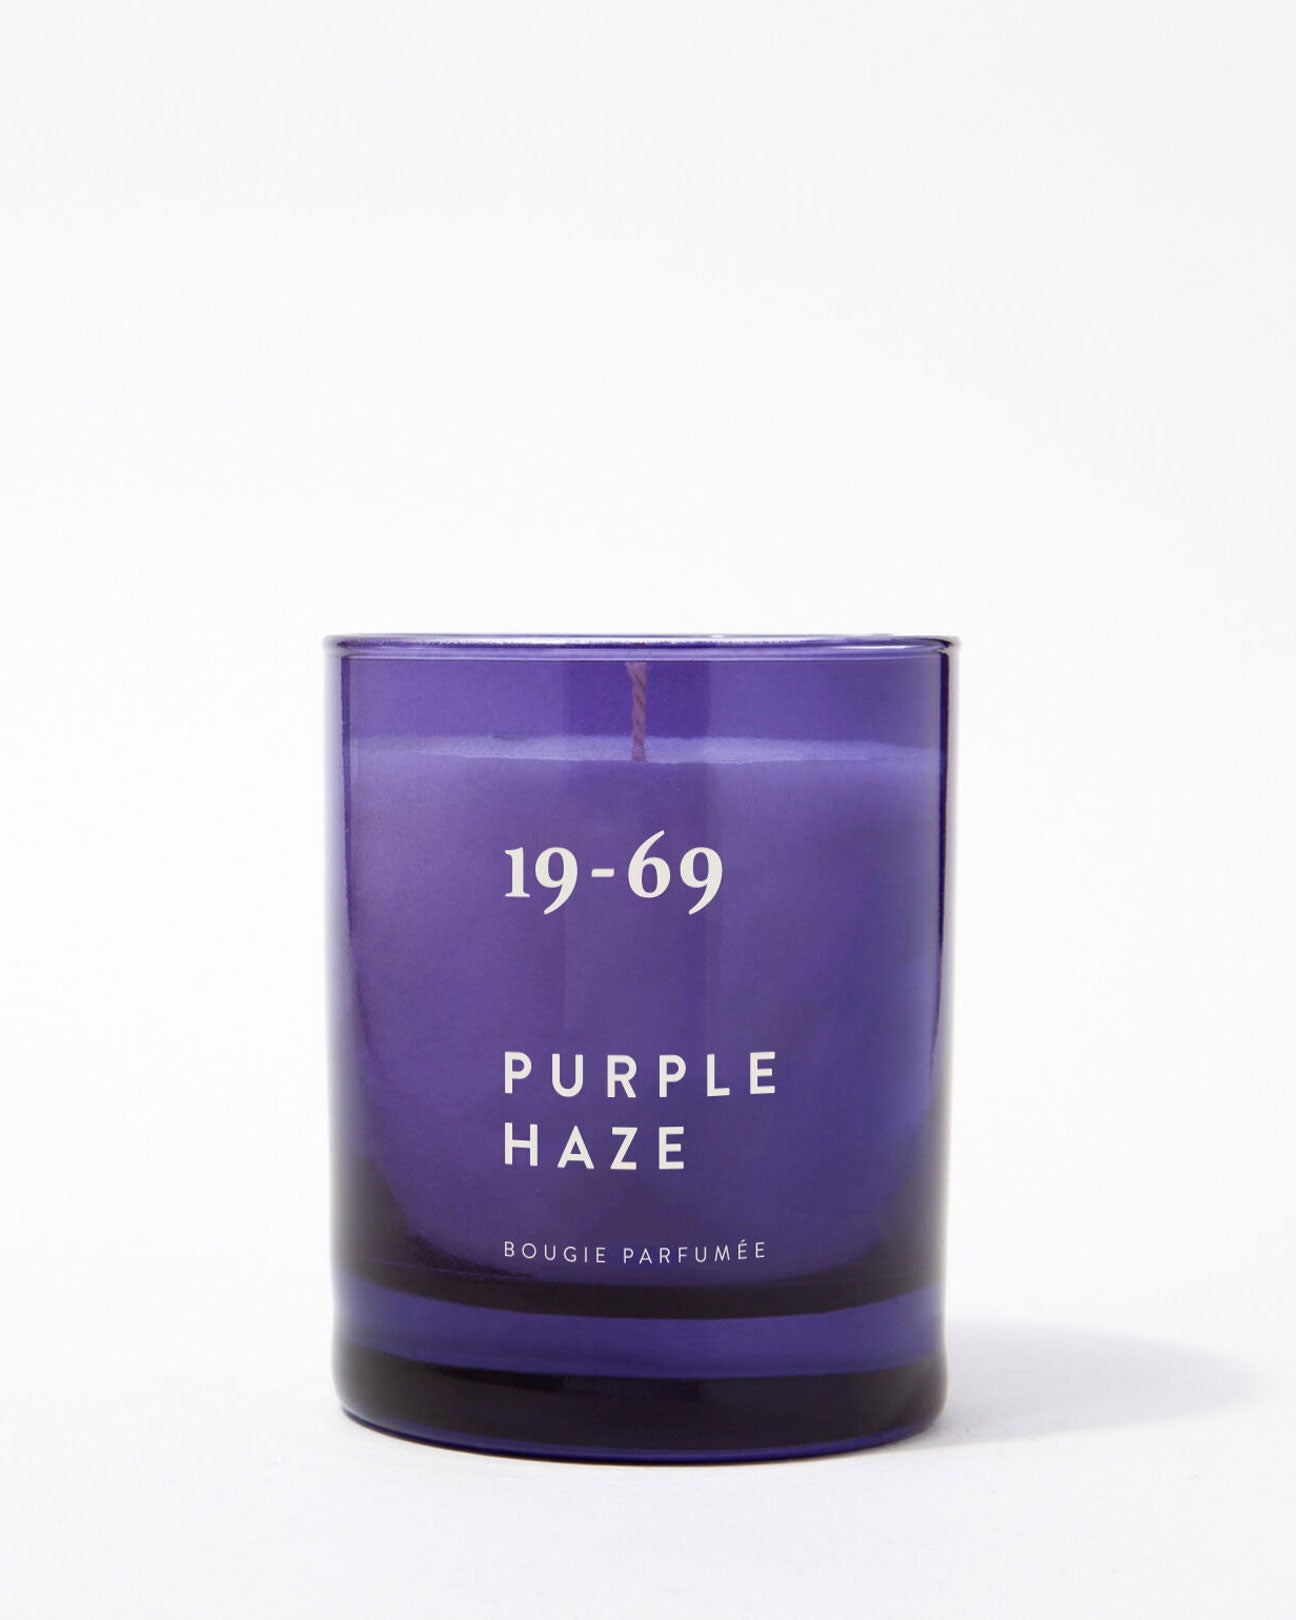 19-69 Candle in Purple Haze